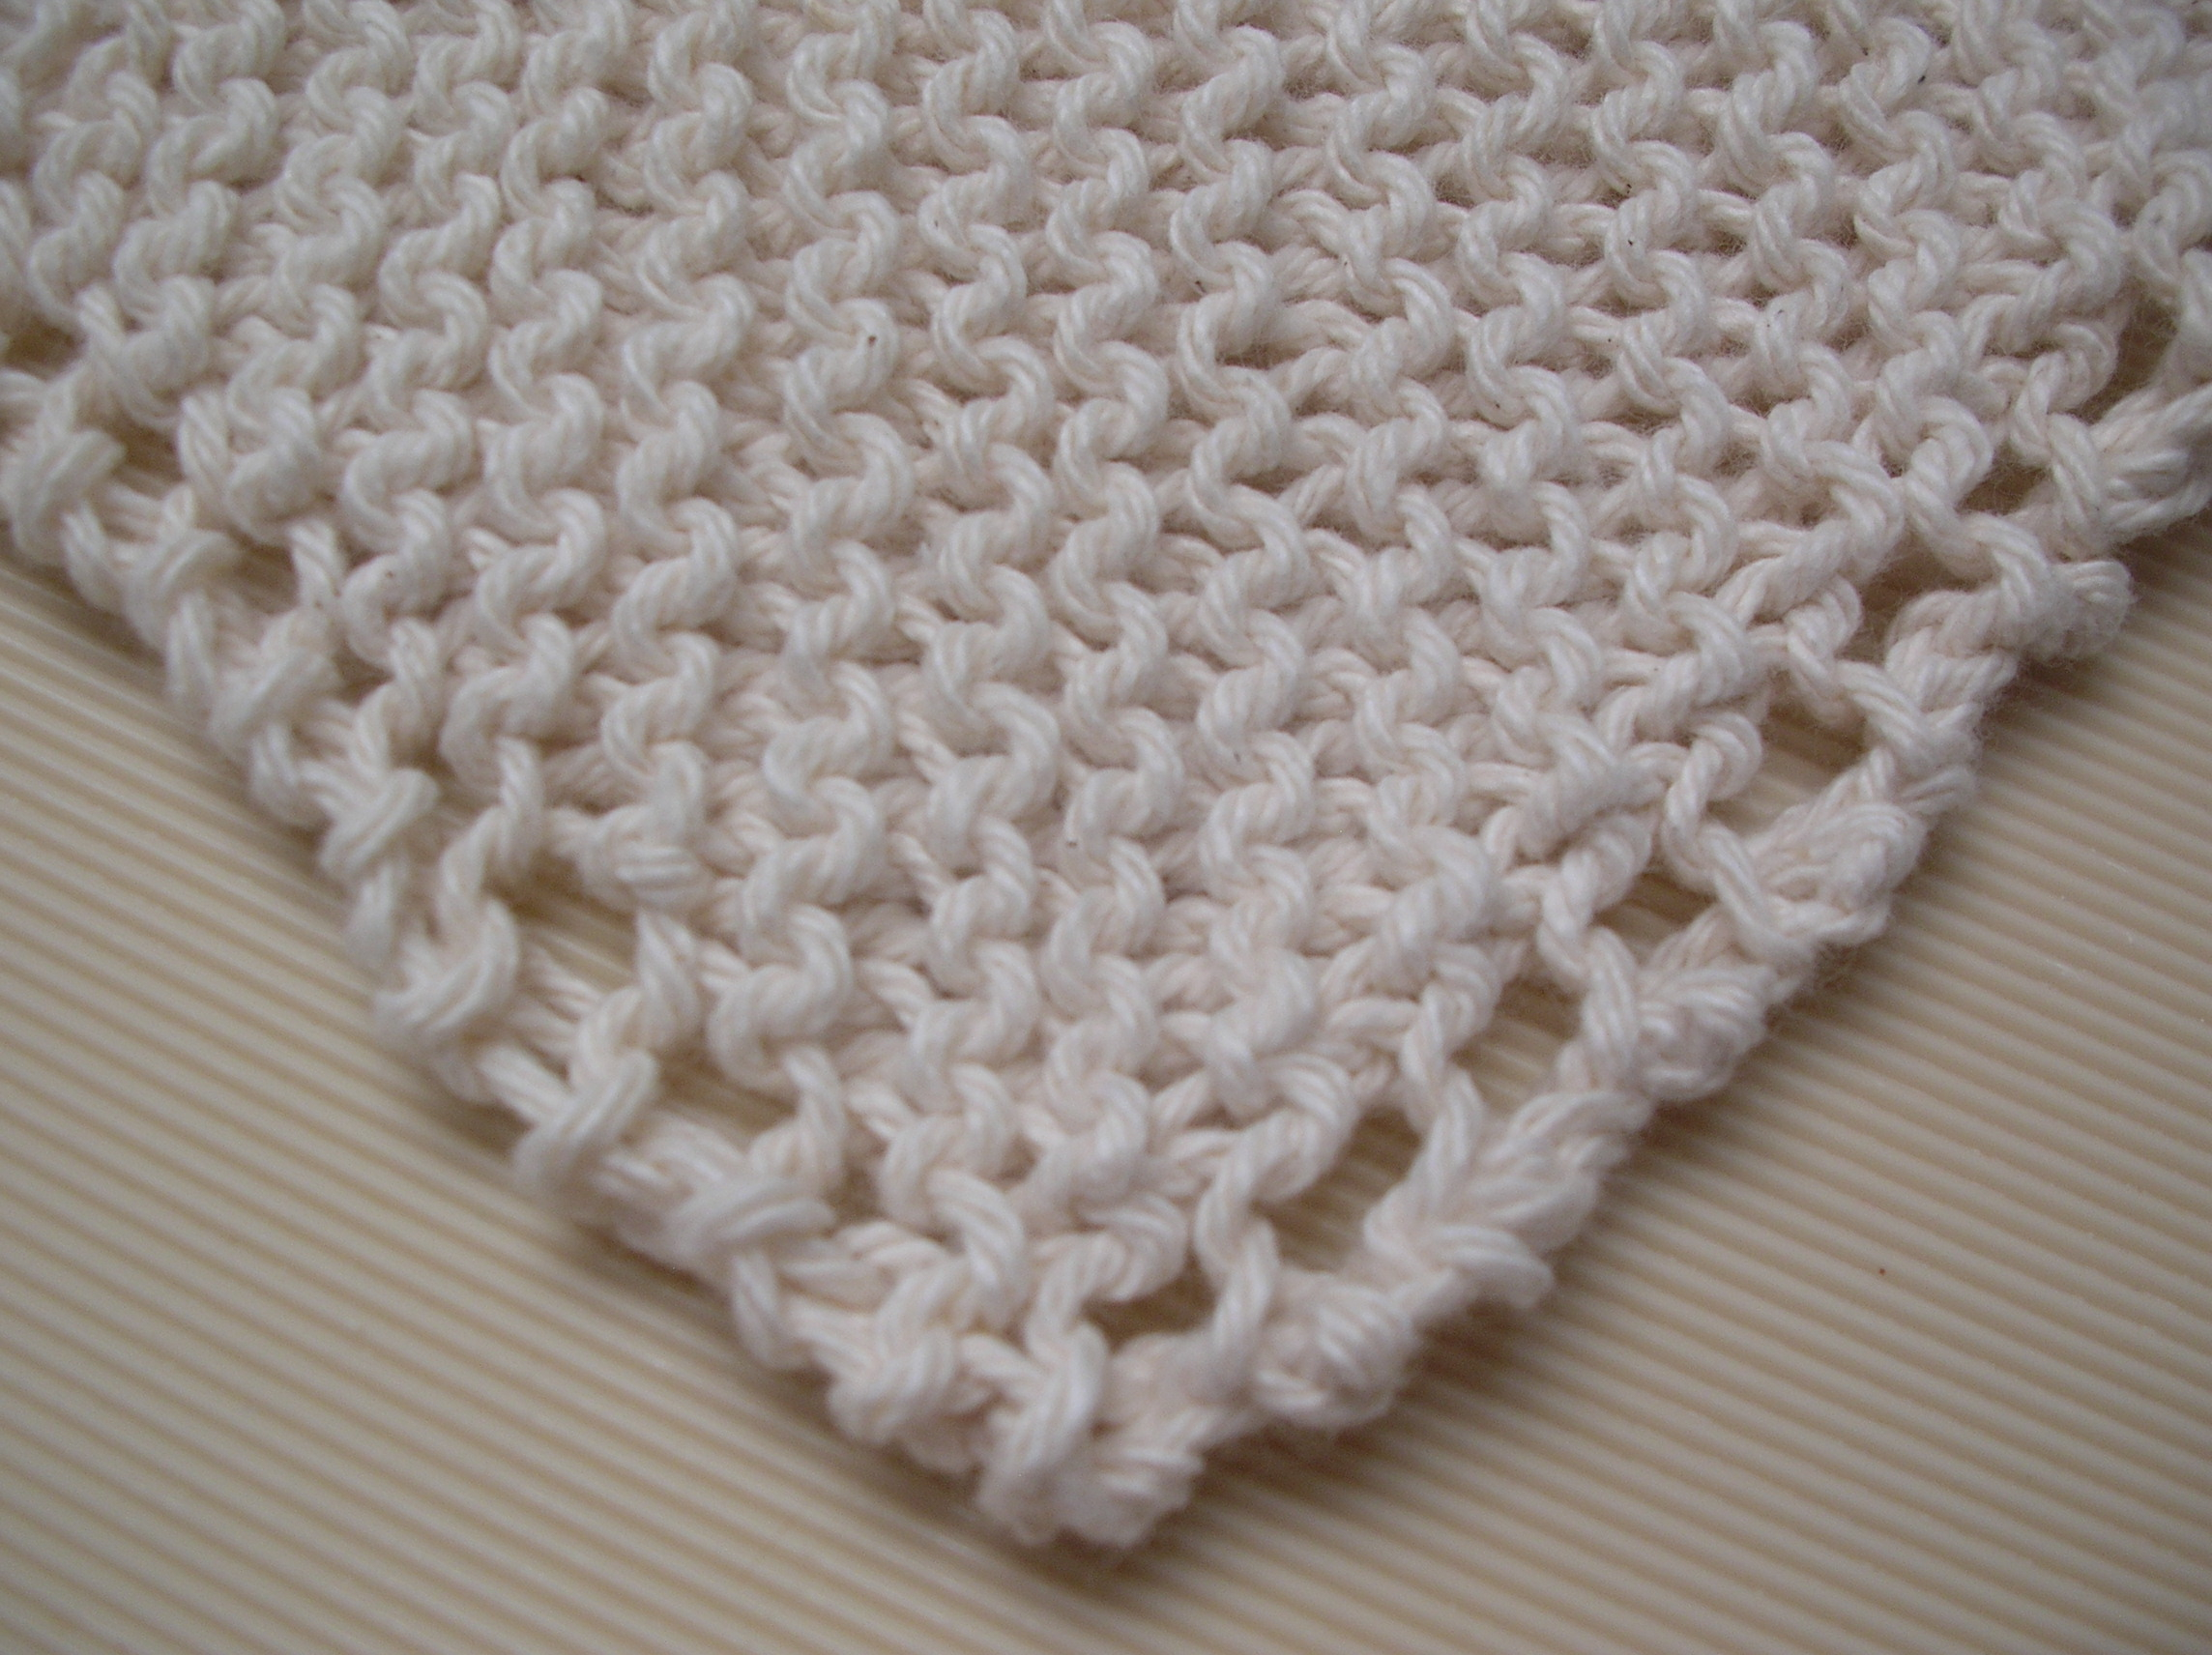 Cotton Dishcloths Knitting Patterns 34 New Crochet Dishcloth Patterns For Free Patterns Hub